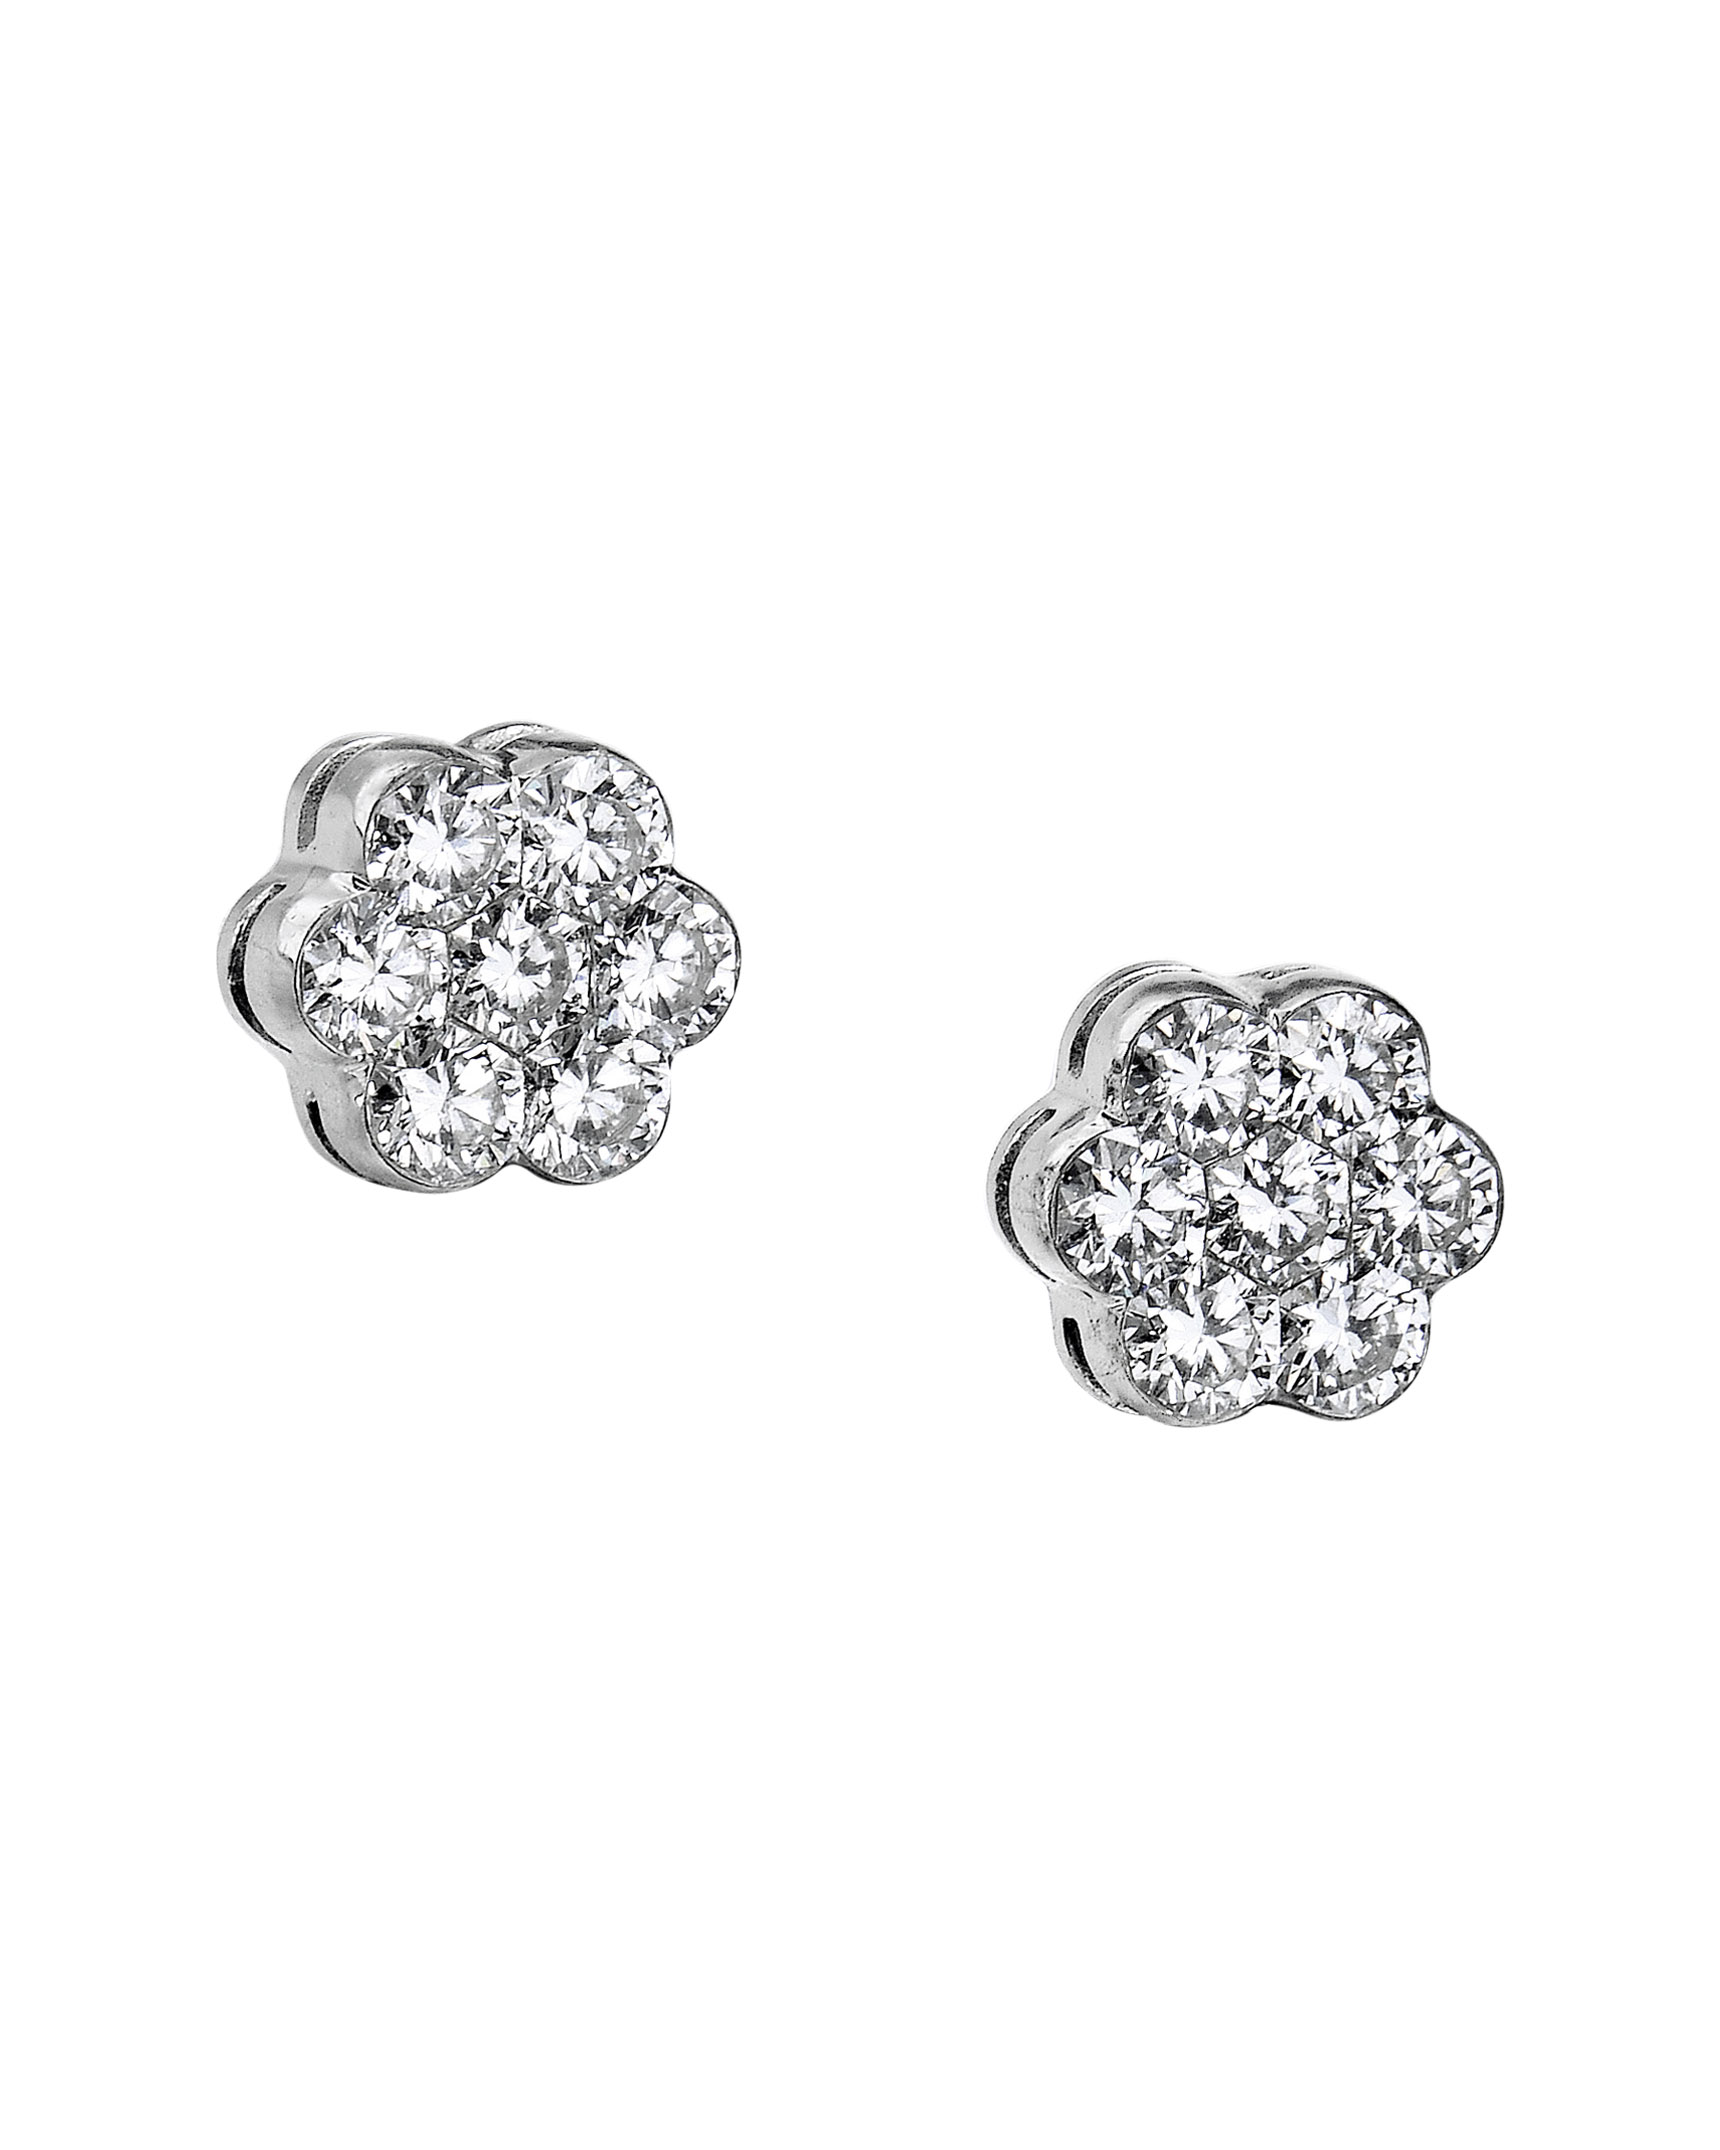 1.10 Carat Total Emerald Cut Diamond Stud Earrings 14k White Gold Beze –  Gem Jewelers Co.